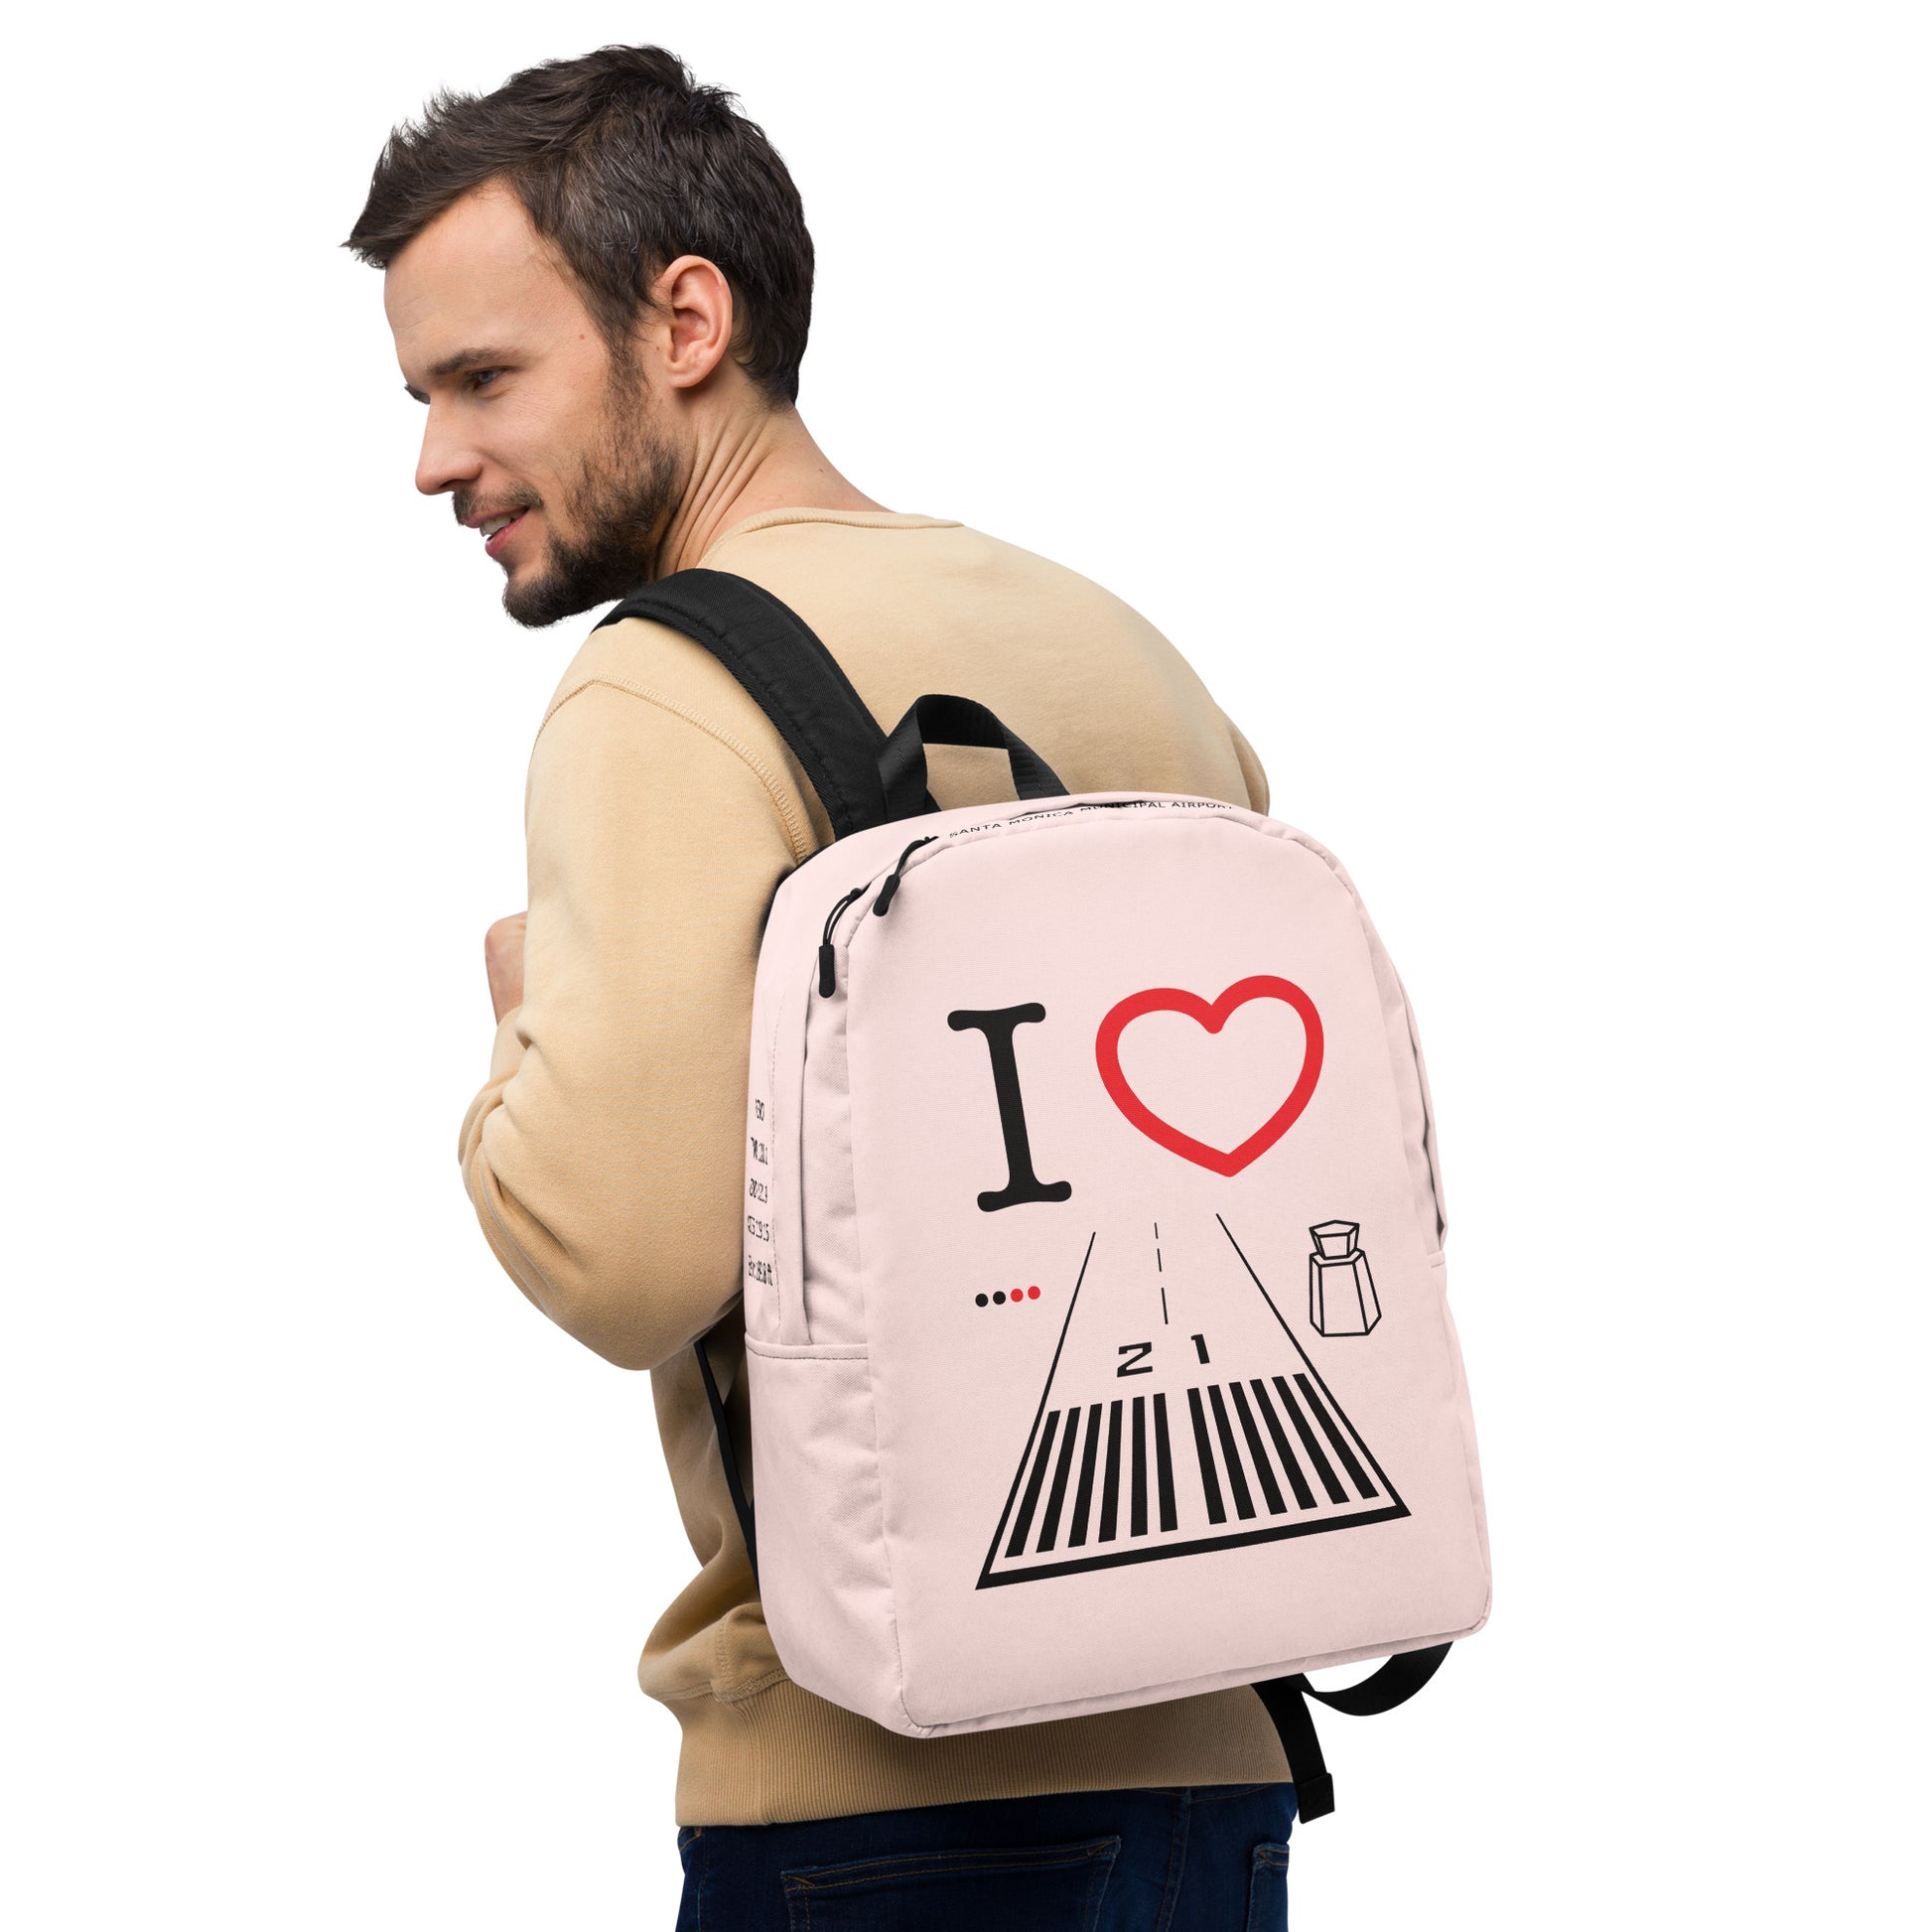 Santa Monica Airport Runway 21 - light pink minimalist backpack